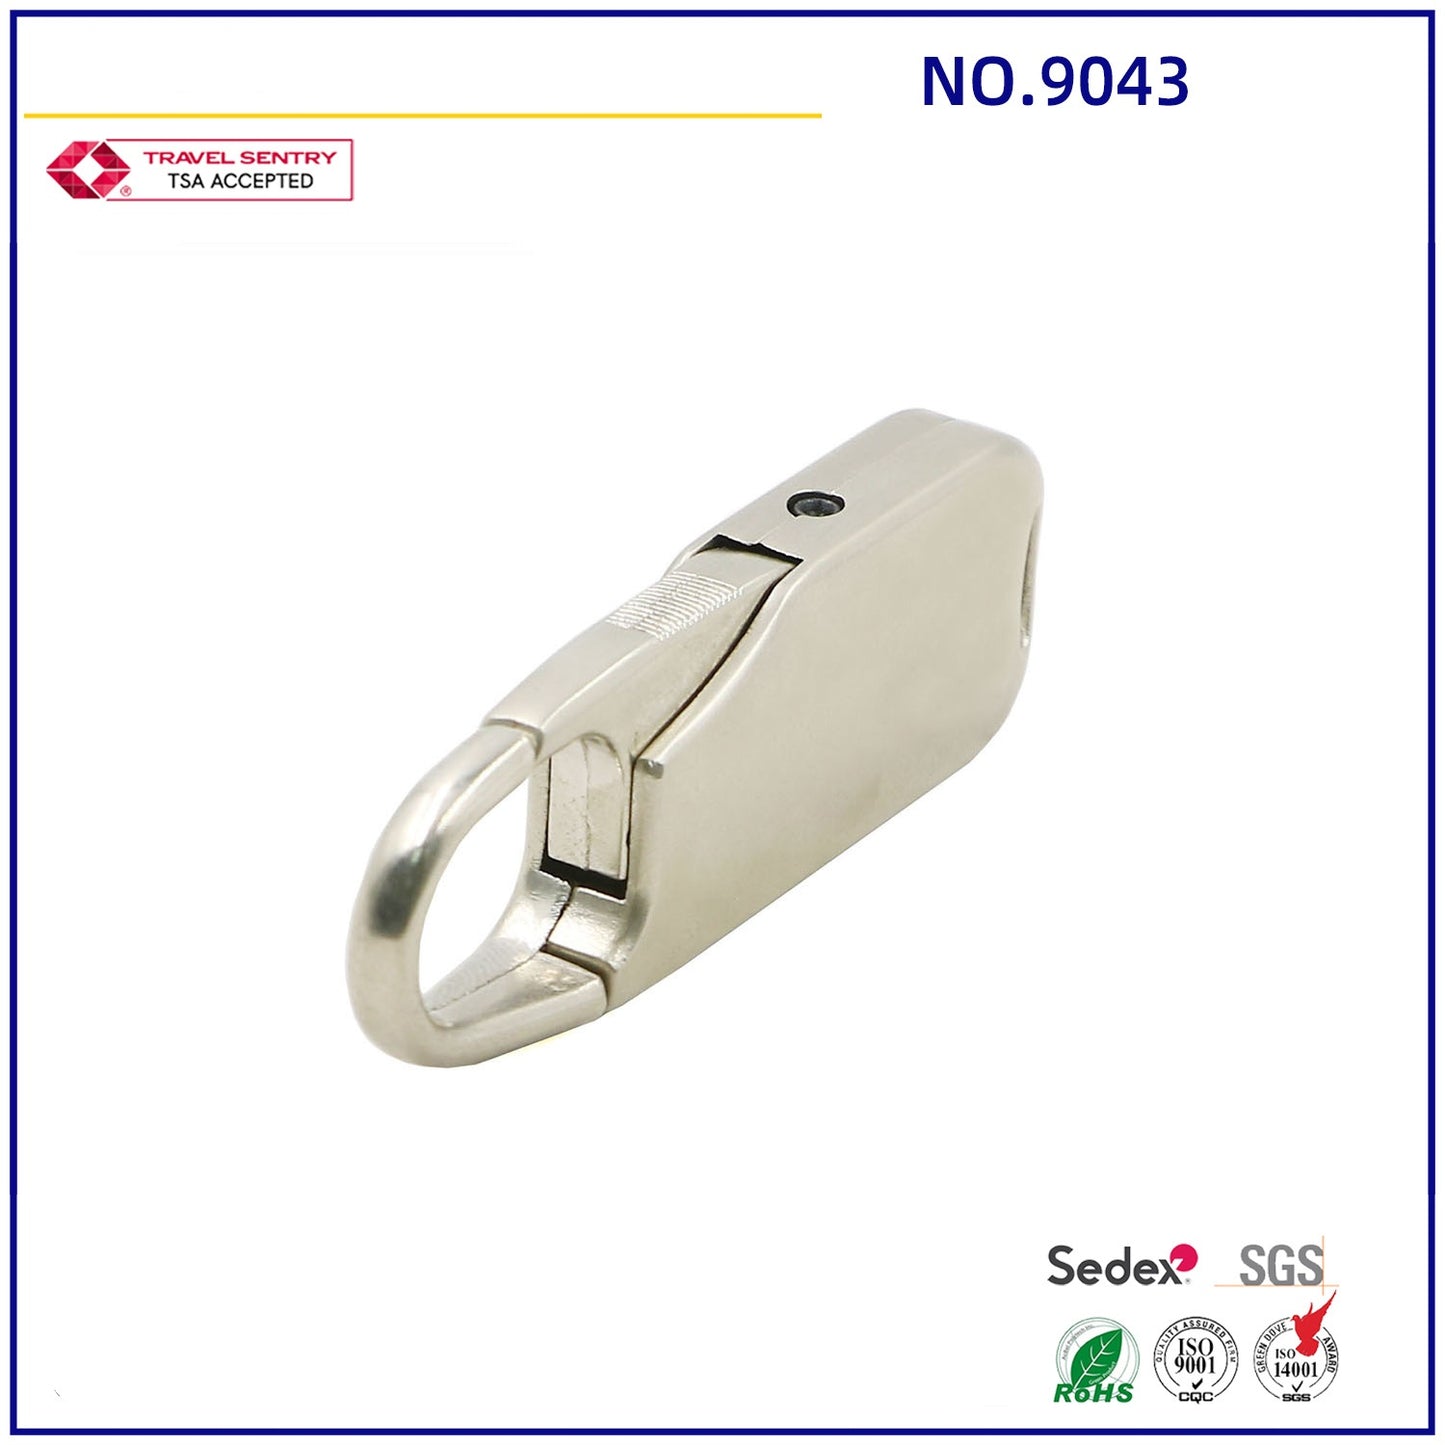 Mini Combination Code Number Padlock Alloy Luggage Lock for Zipper Bag Handbag Drawer EDC Tool-8